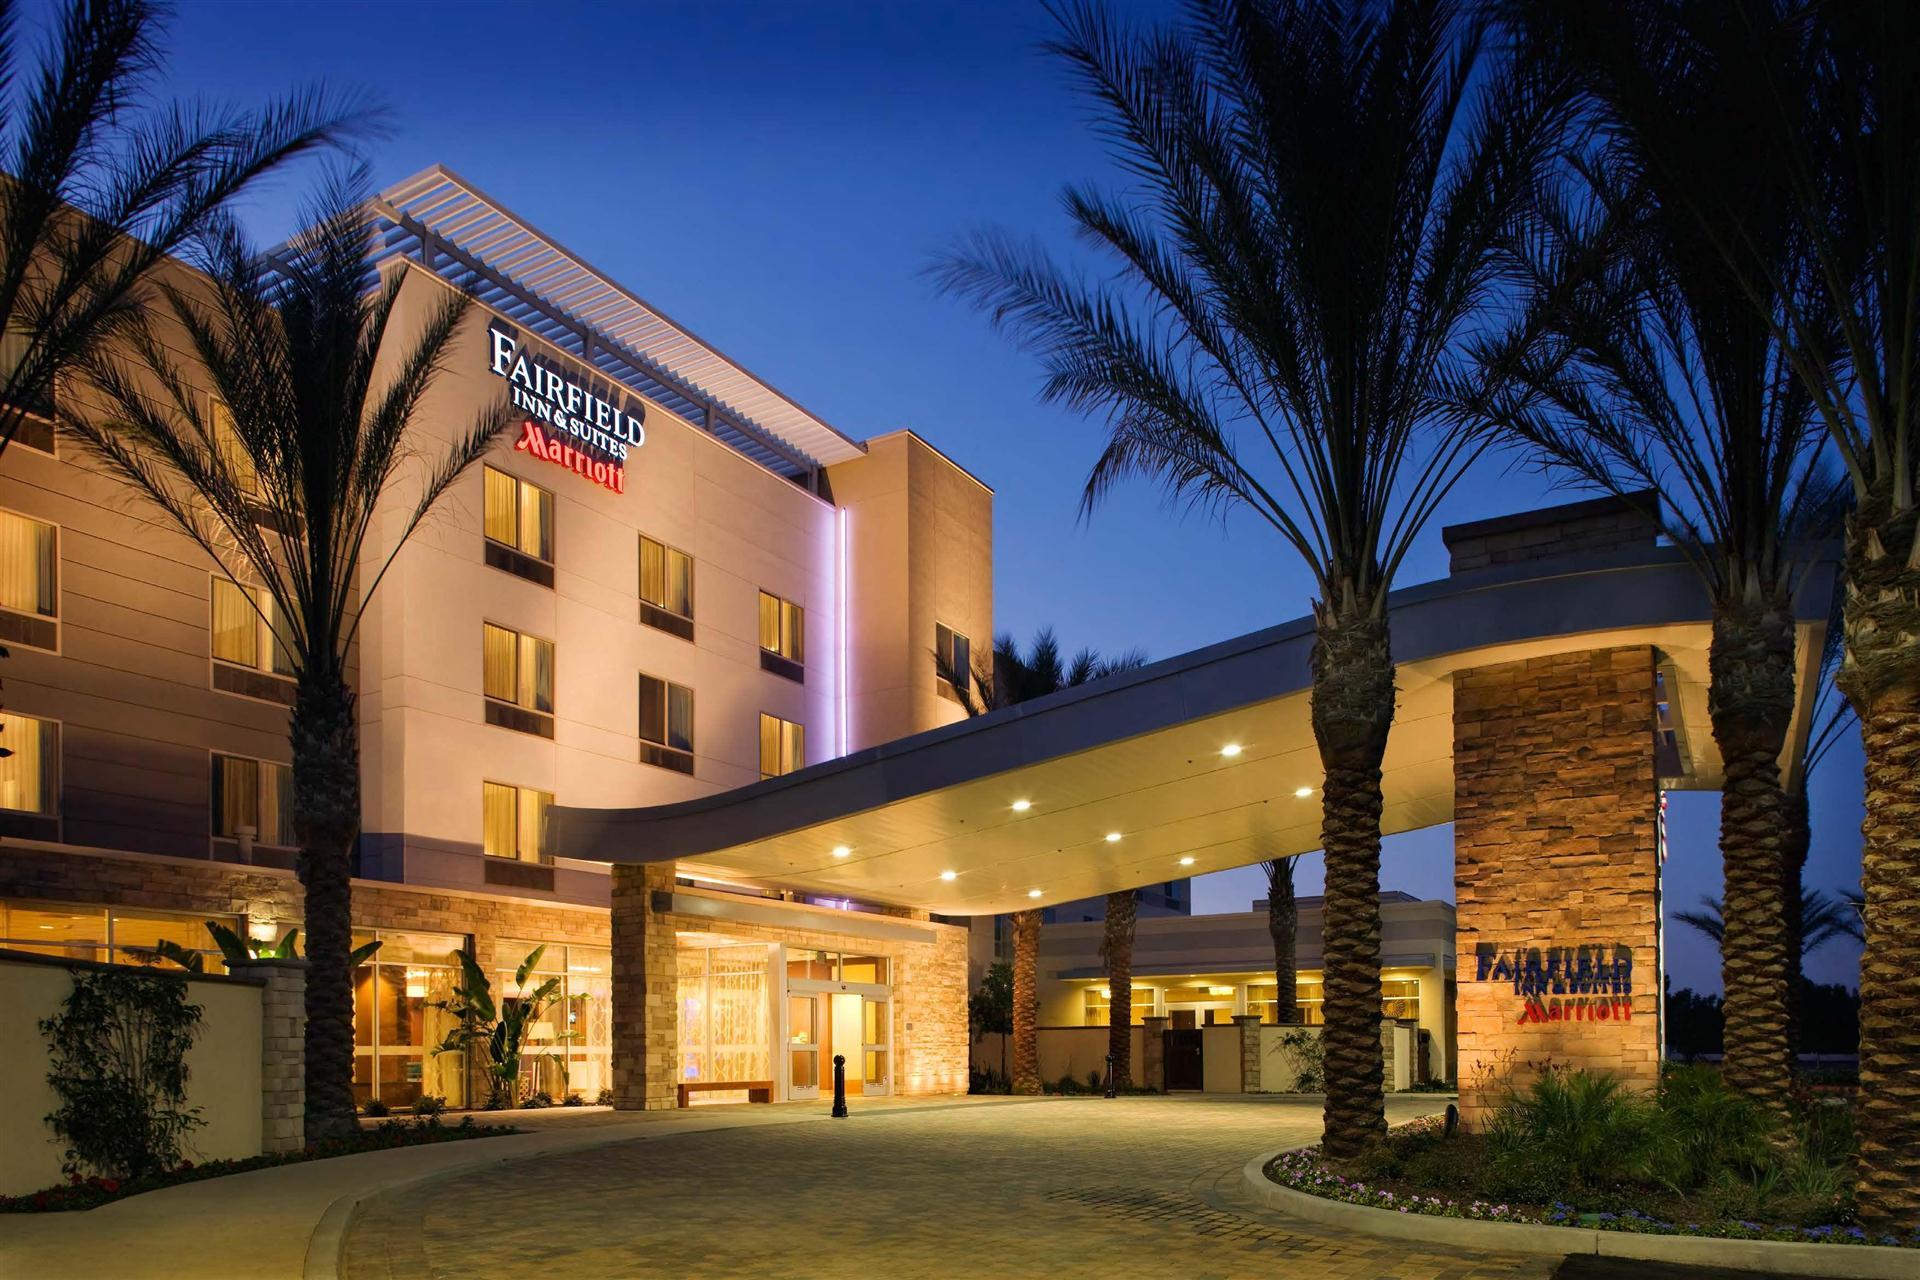 Fairfield Inn & Suites Tustin Orange County in Tustin, CA